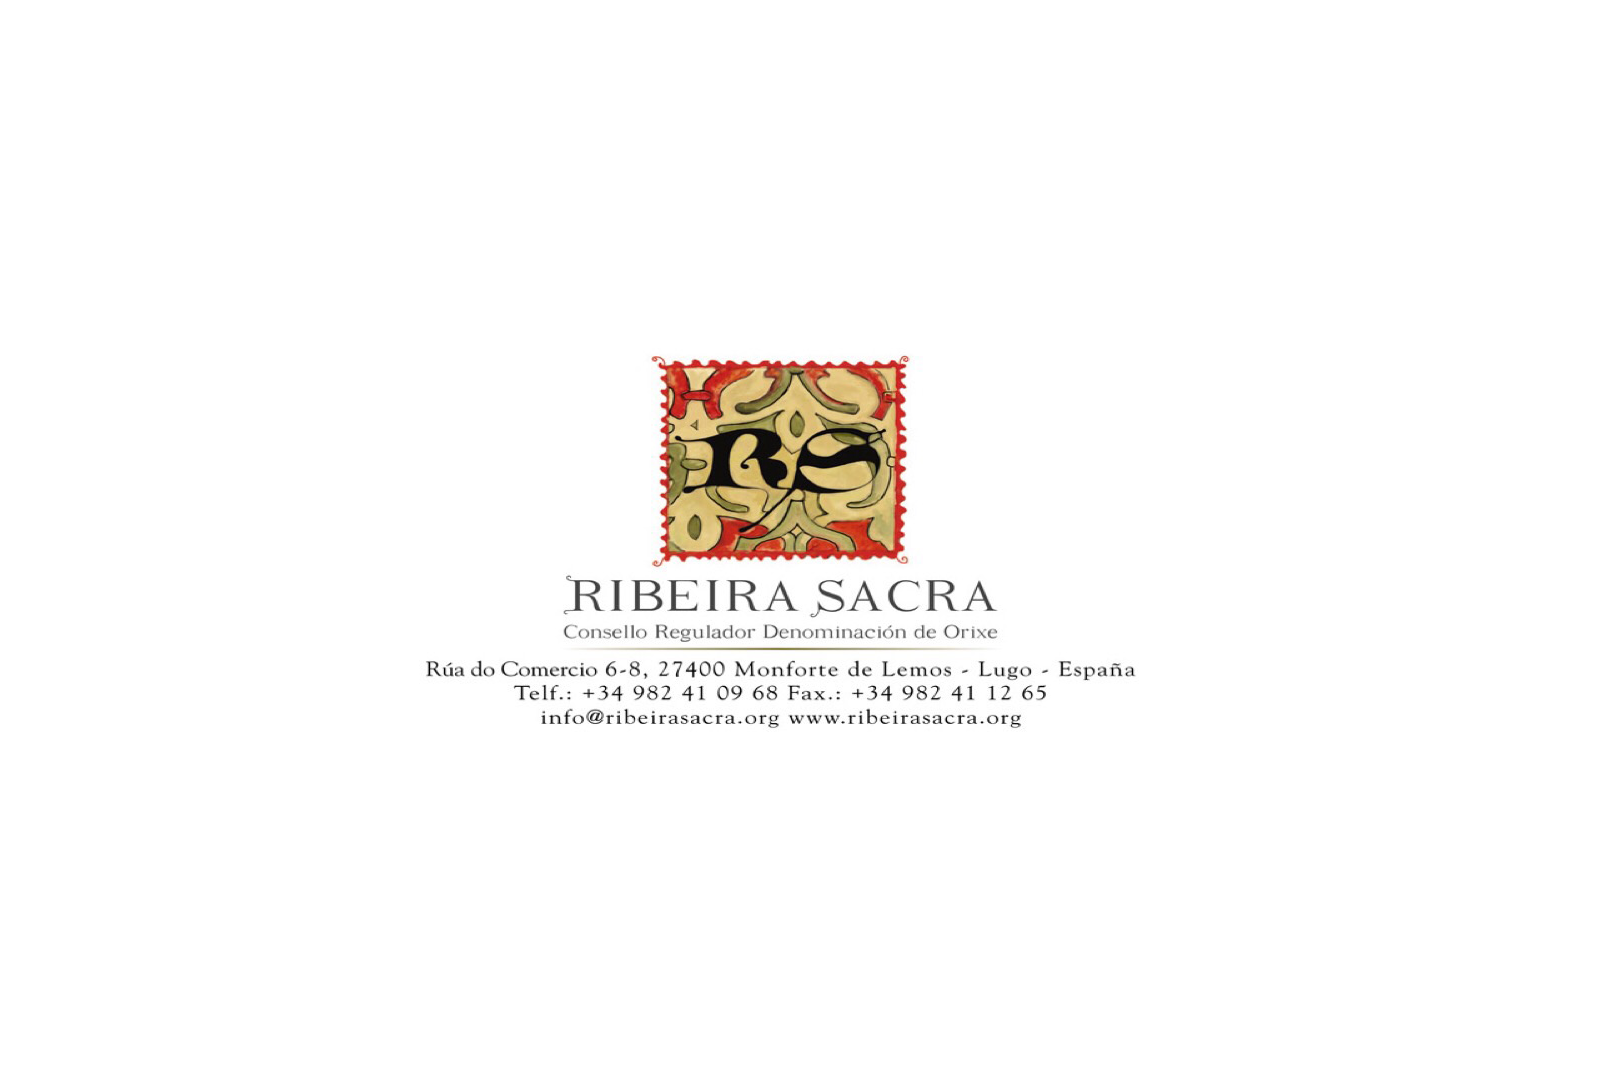 Ribeira Sacra estará presente en el Salón de Gourmets 2016. - VINOS DIFERENTES